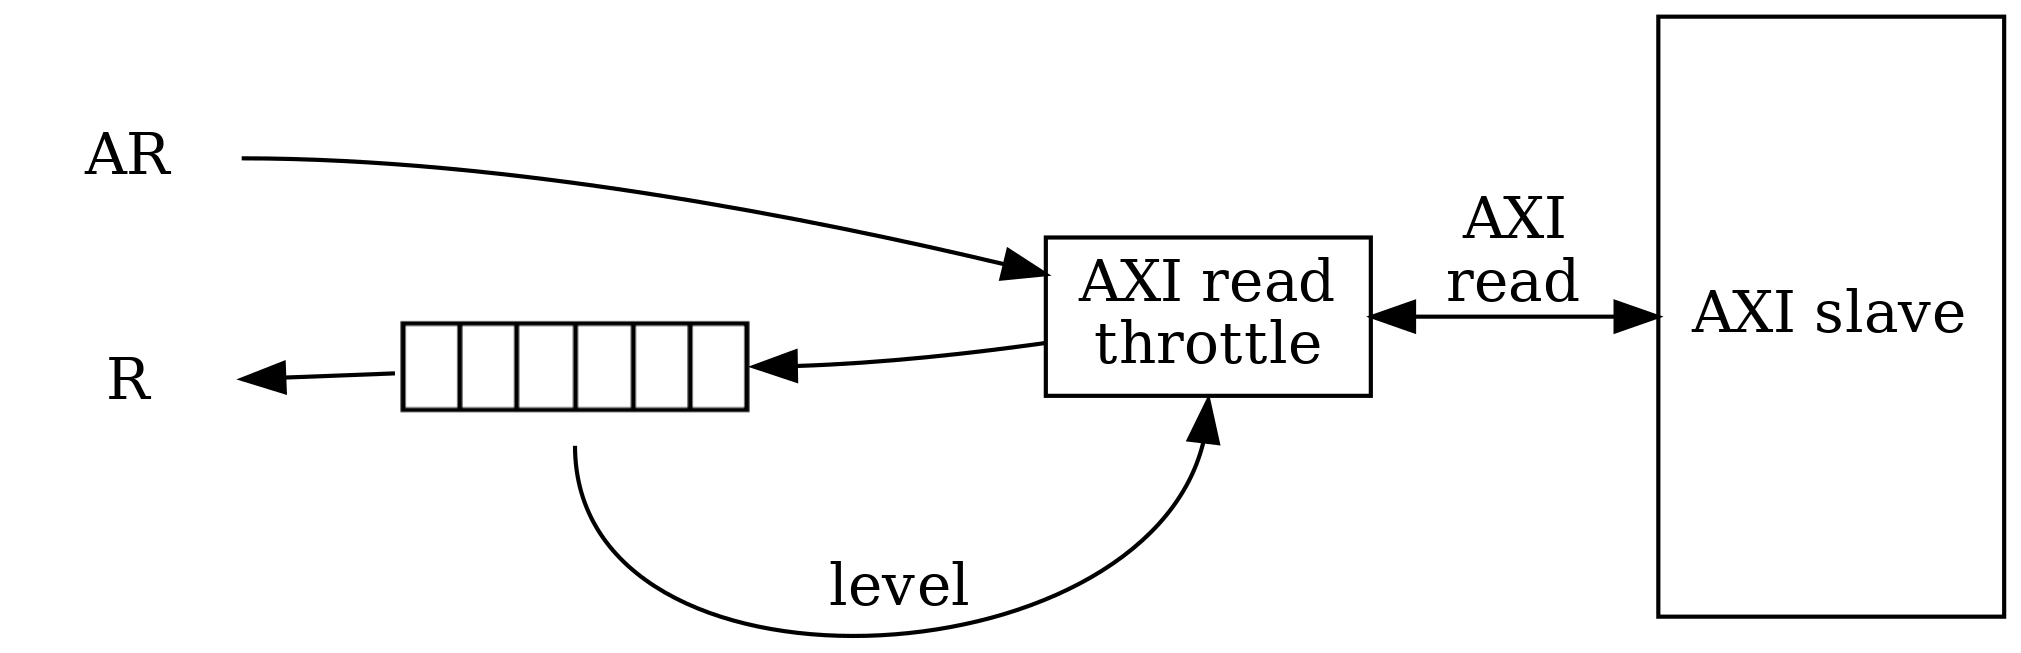 digraph my_graph {
graph [dpi = 300];
rankdir="LR";

ar [shape=none label="AR"];
r [shape=none label="R"];

{
  rank=same;
  ar;
  r;
}

r_fifo [label="" shape=none image="fifo.png"];
r -> r_fifo [dir="back"];

axi_read_throttle [shape=box label="AXI read\nthrottle"];
ar:e -> axi_read_throttle;
r_fifo:e -> axi_read_throttle [dir="back"];
r_fifo:s -> axi_read_throttle:s [label="level"];

axi_slave [shape=box label="AXI slave" height=2];

axi_read_throttle -> axi_slave [dir="both" label="AXI\nread"];
}